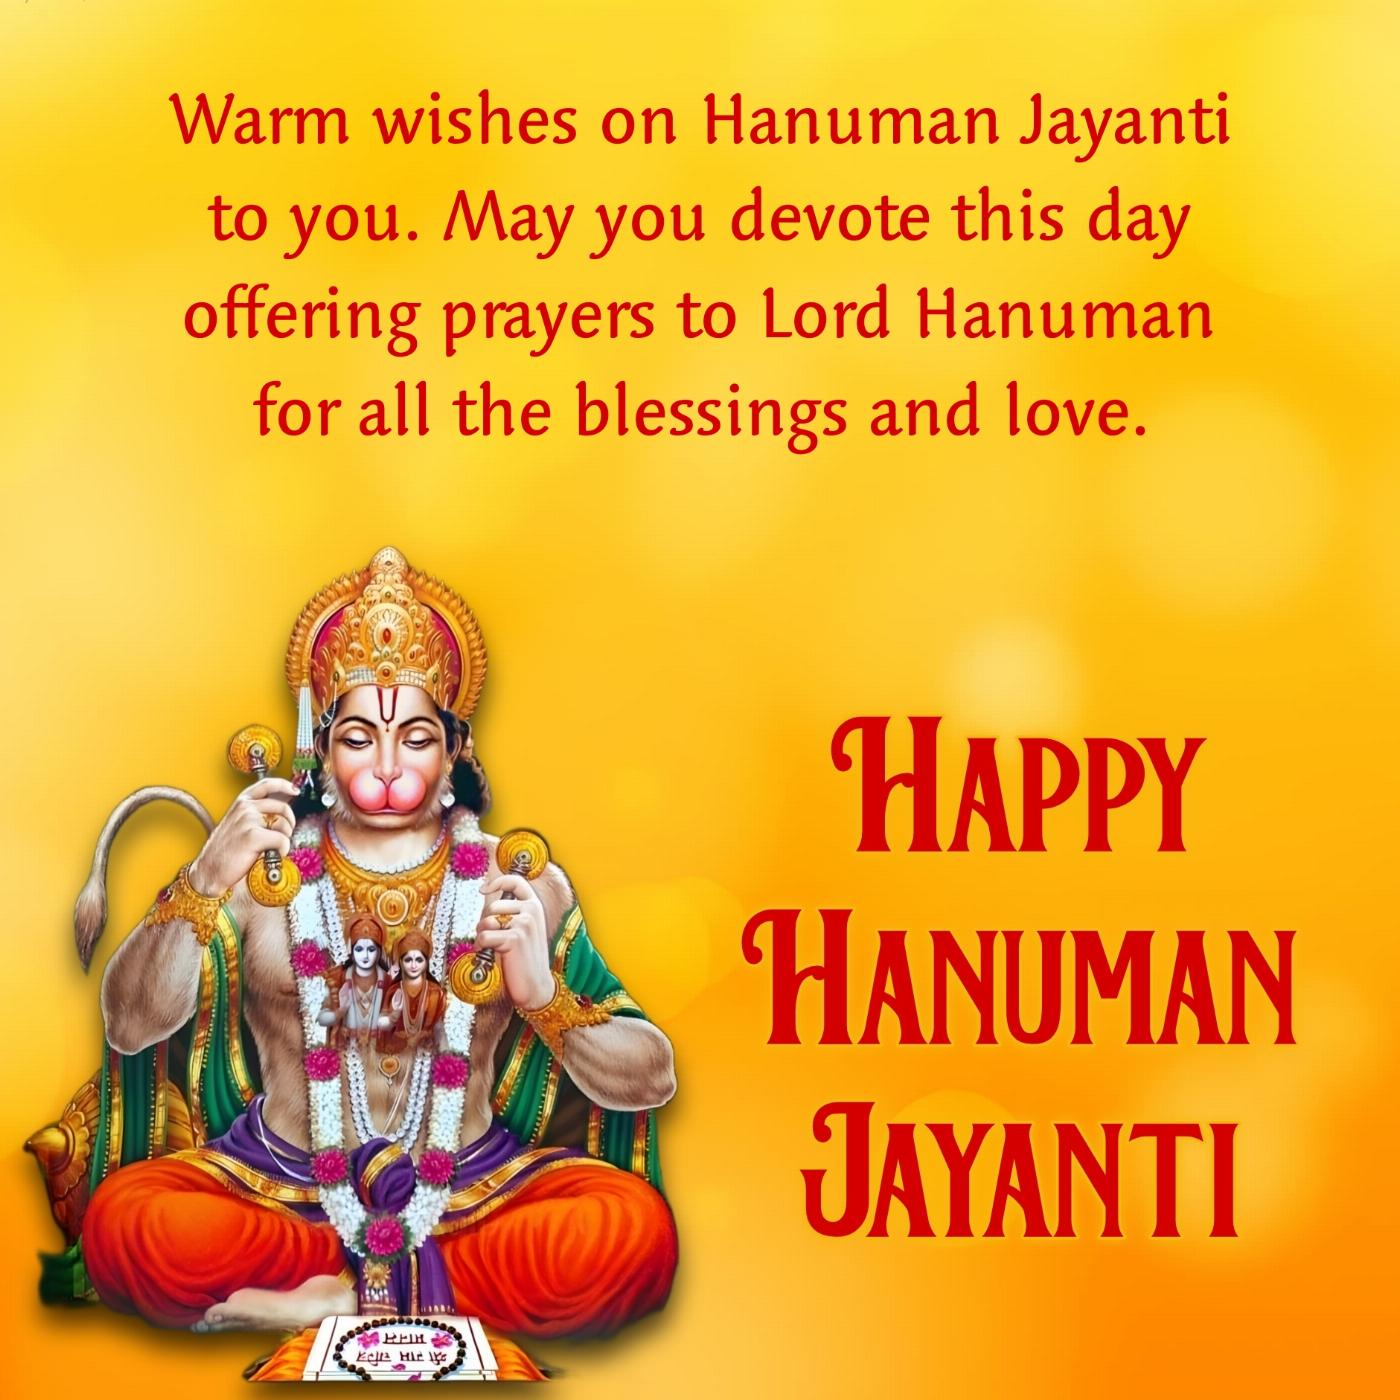 Warm wishes on Hanuman Jayanti to you